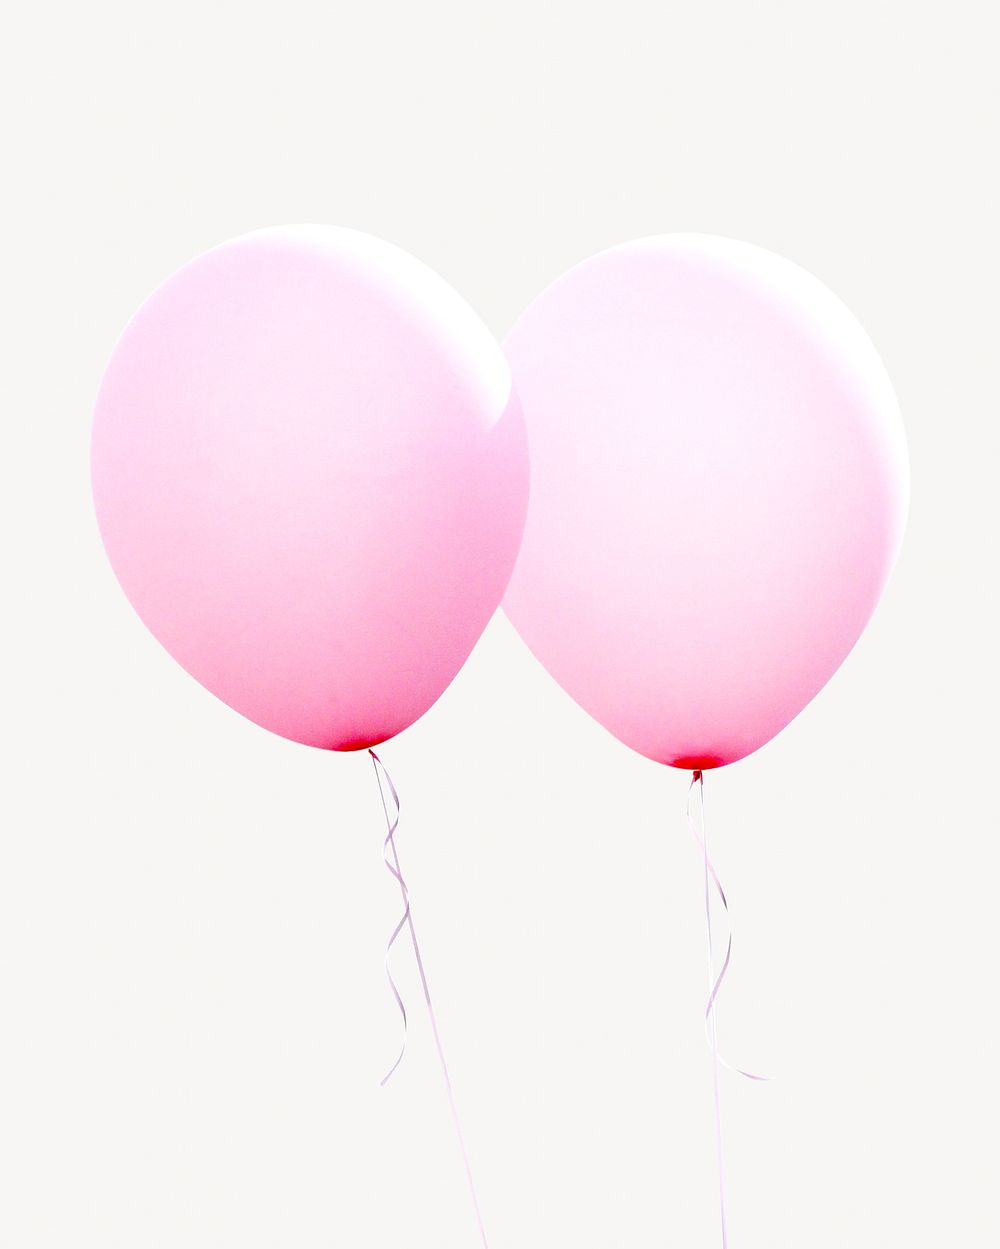 Pink balloon, isolated image